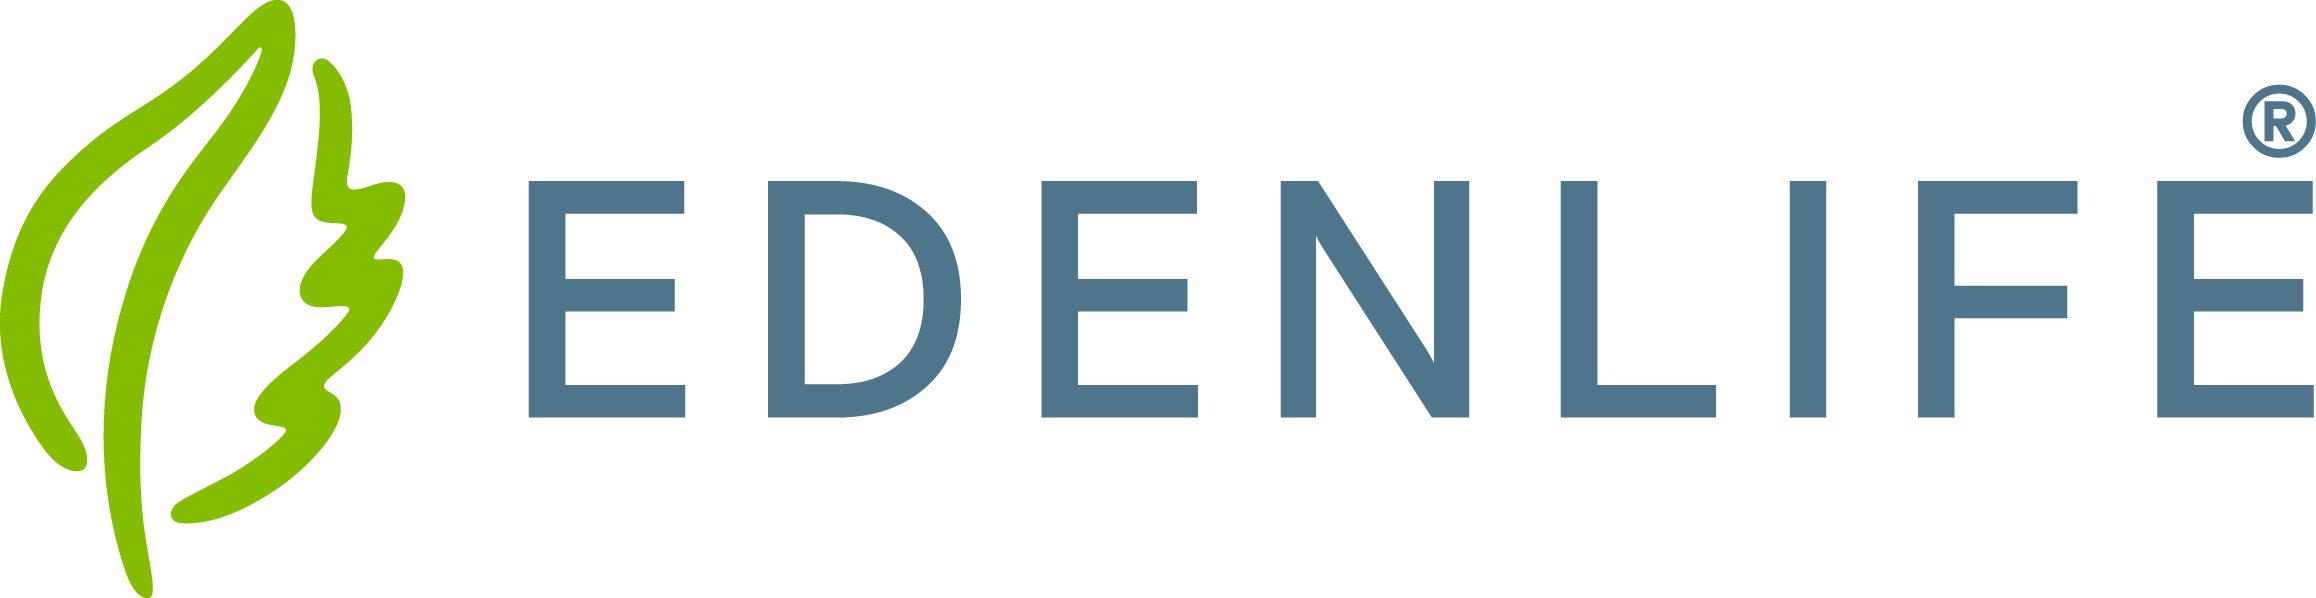 Edenlife Communities corporate logo